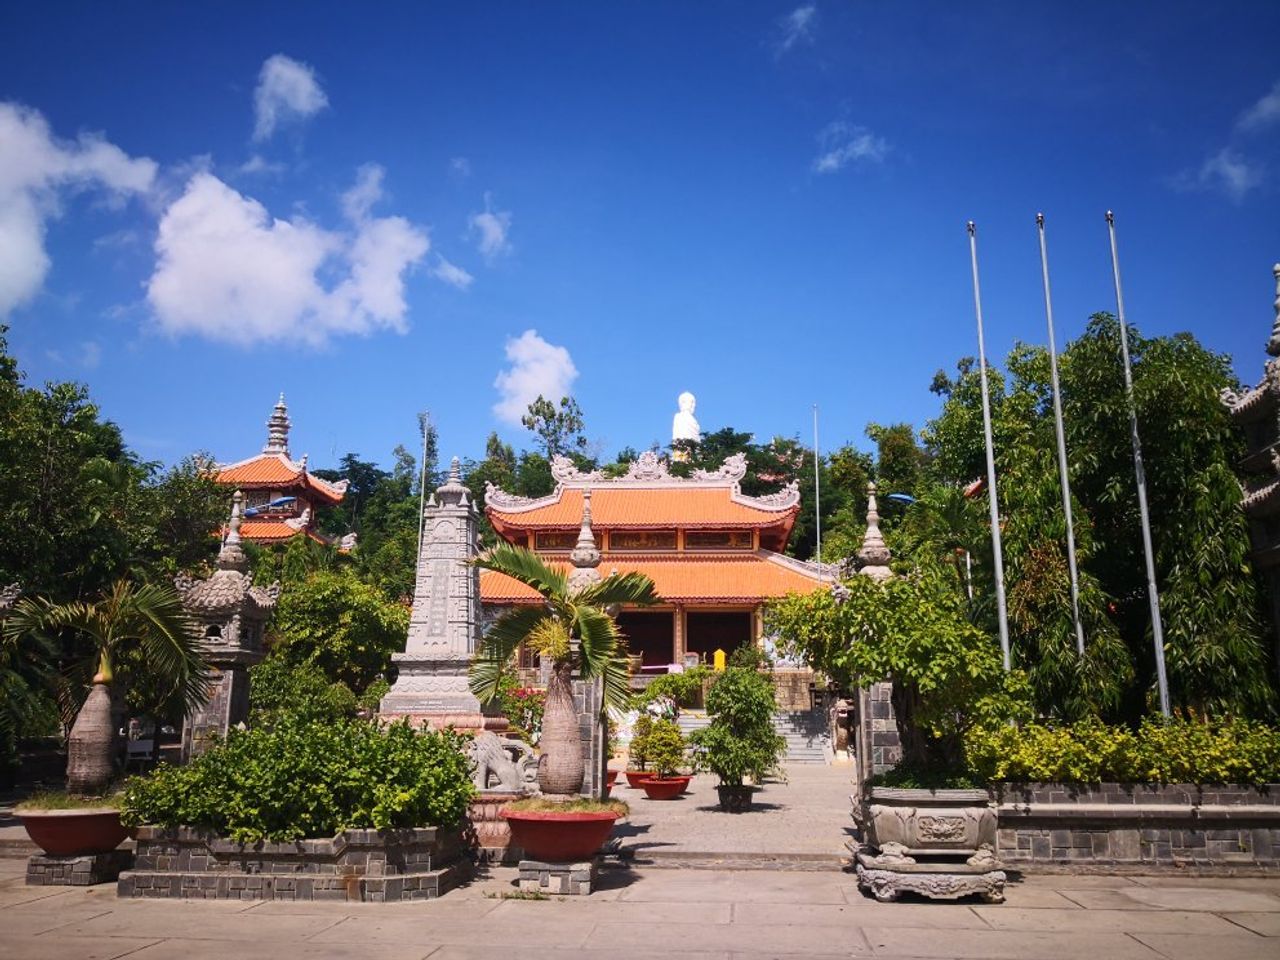 Visit to the Long Son Pagoda